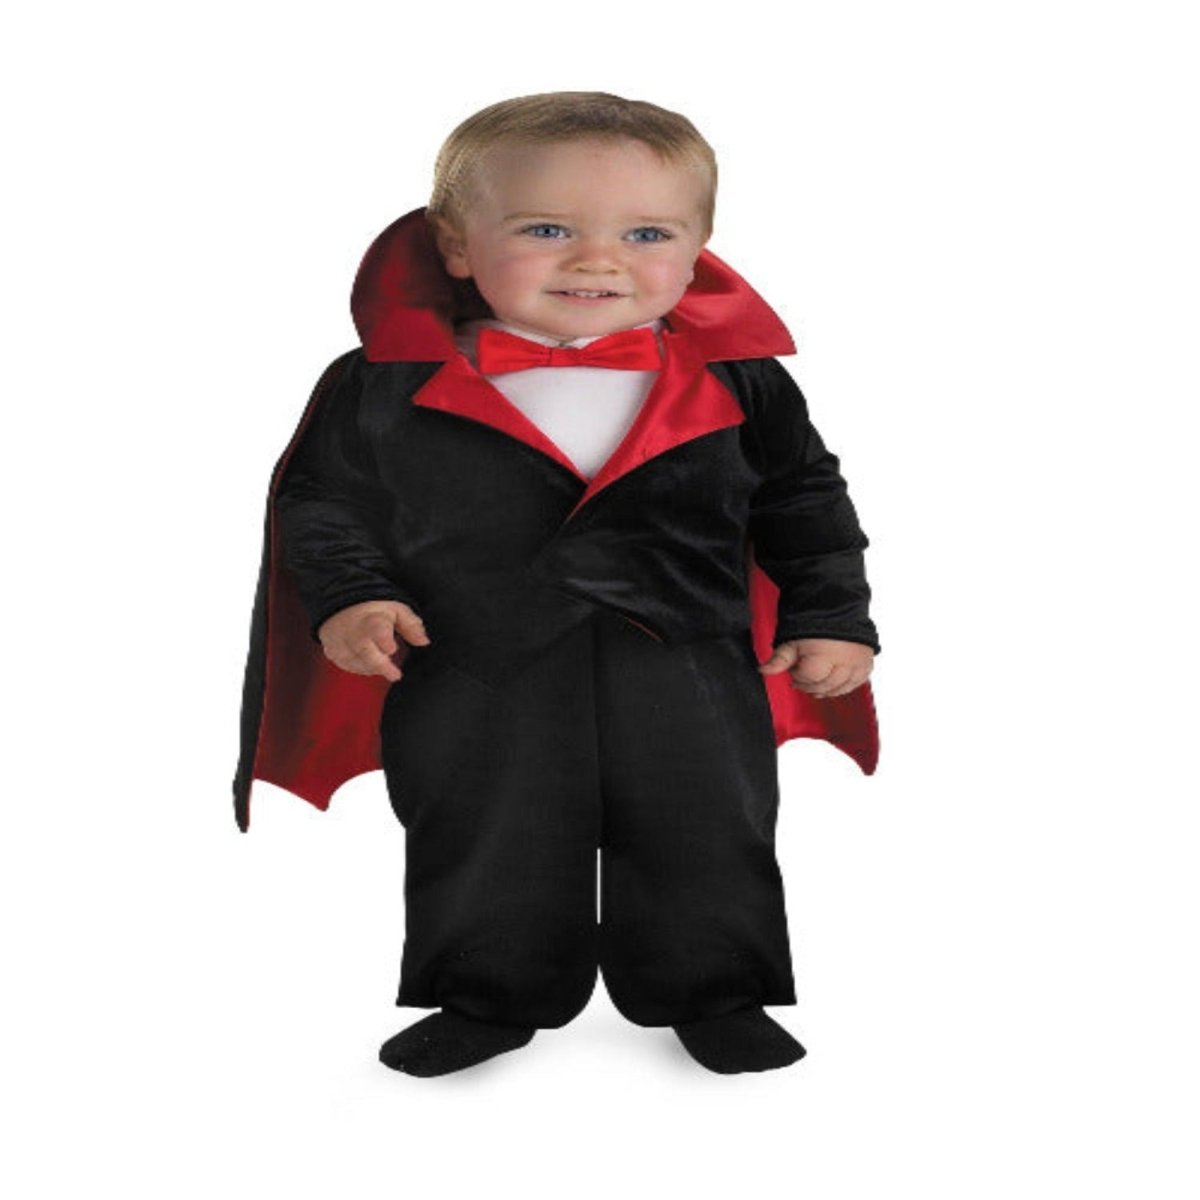 L'Vampire Infant Costume - worldclasscostumes